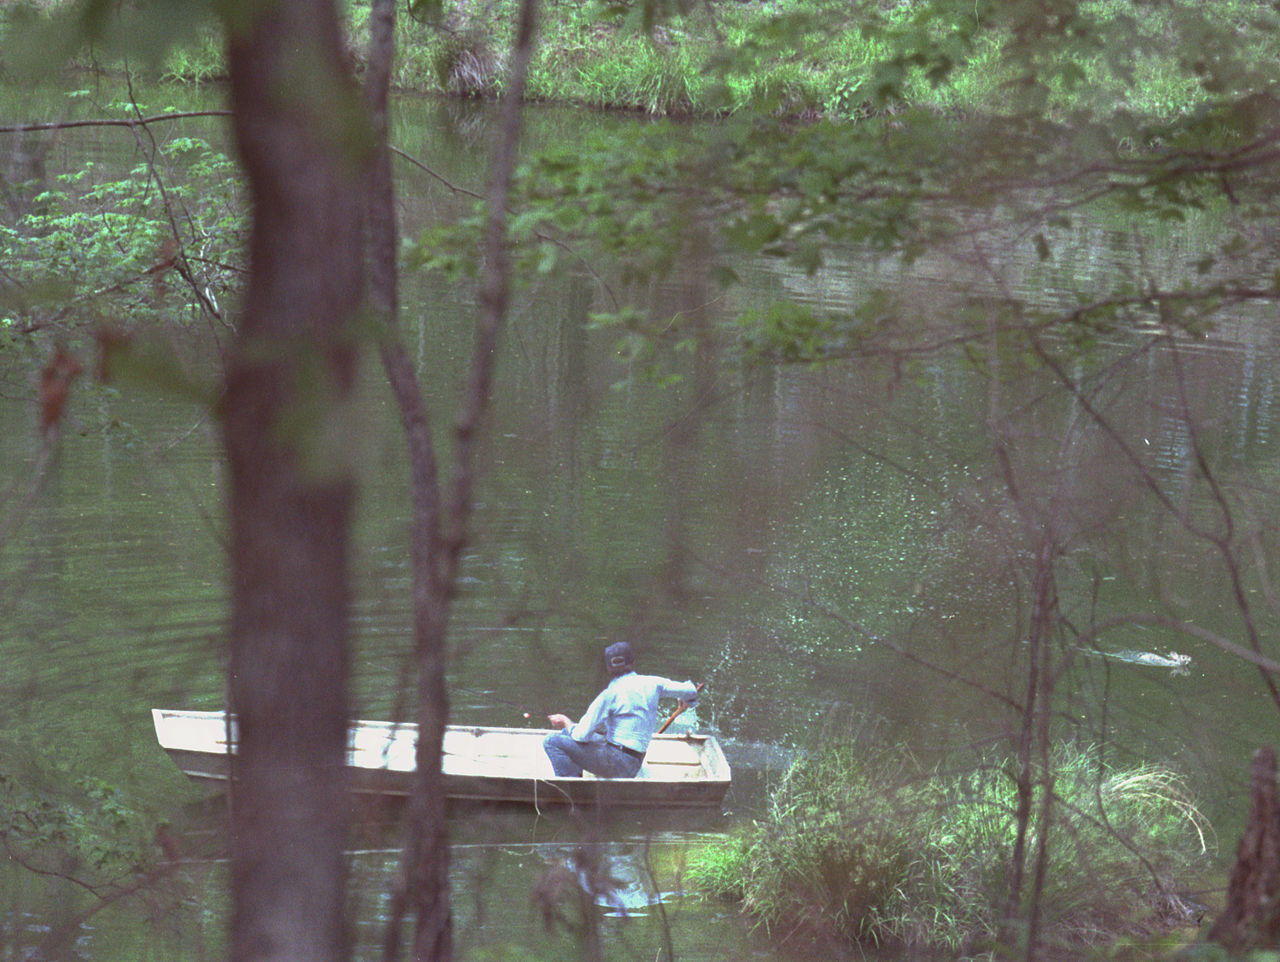 Jimmy_Carter_in_boat_chasing_away_swimming_rabbit,_Plains,_Georgia_-_19790420.jpg